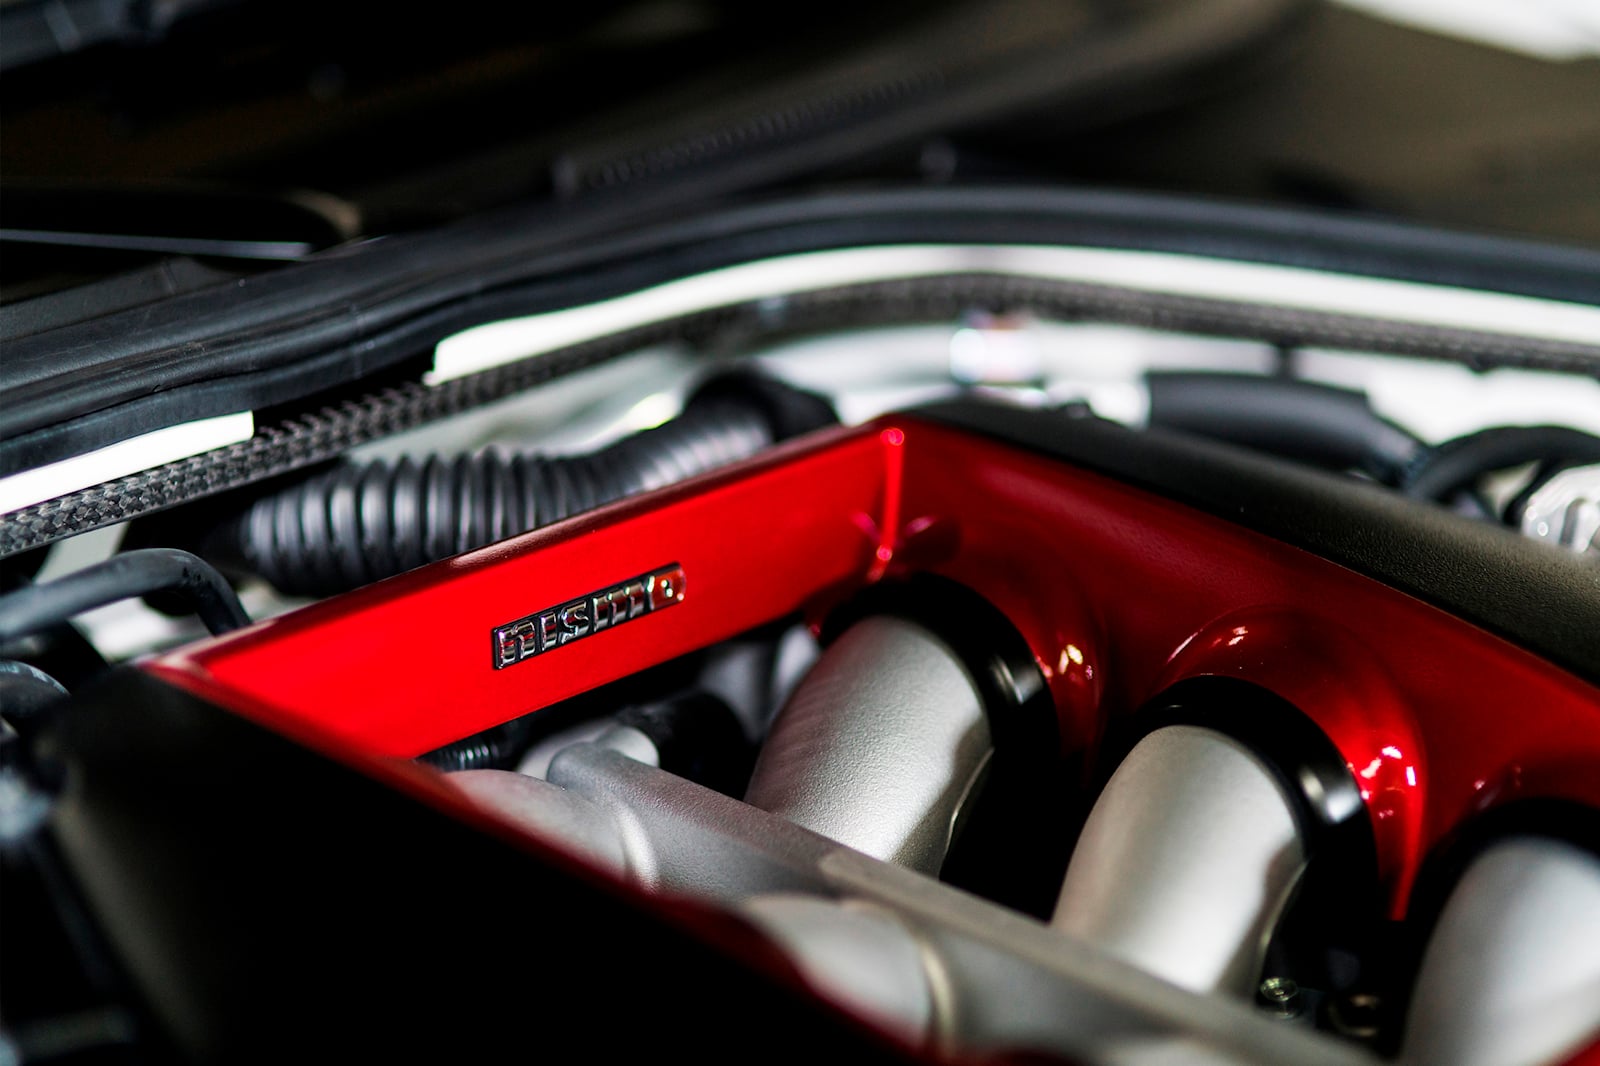  R36 Nissan GT-R : Hybrid on the Horizon?